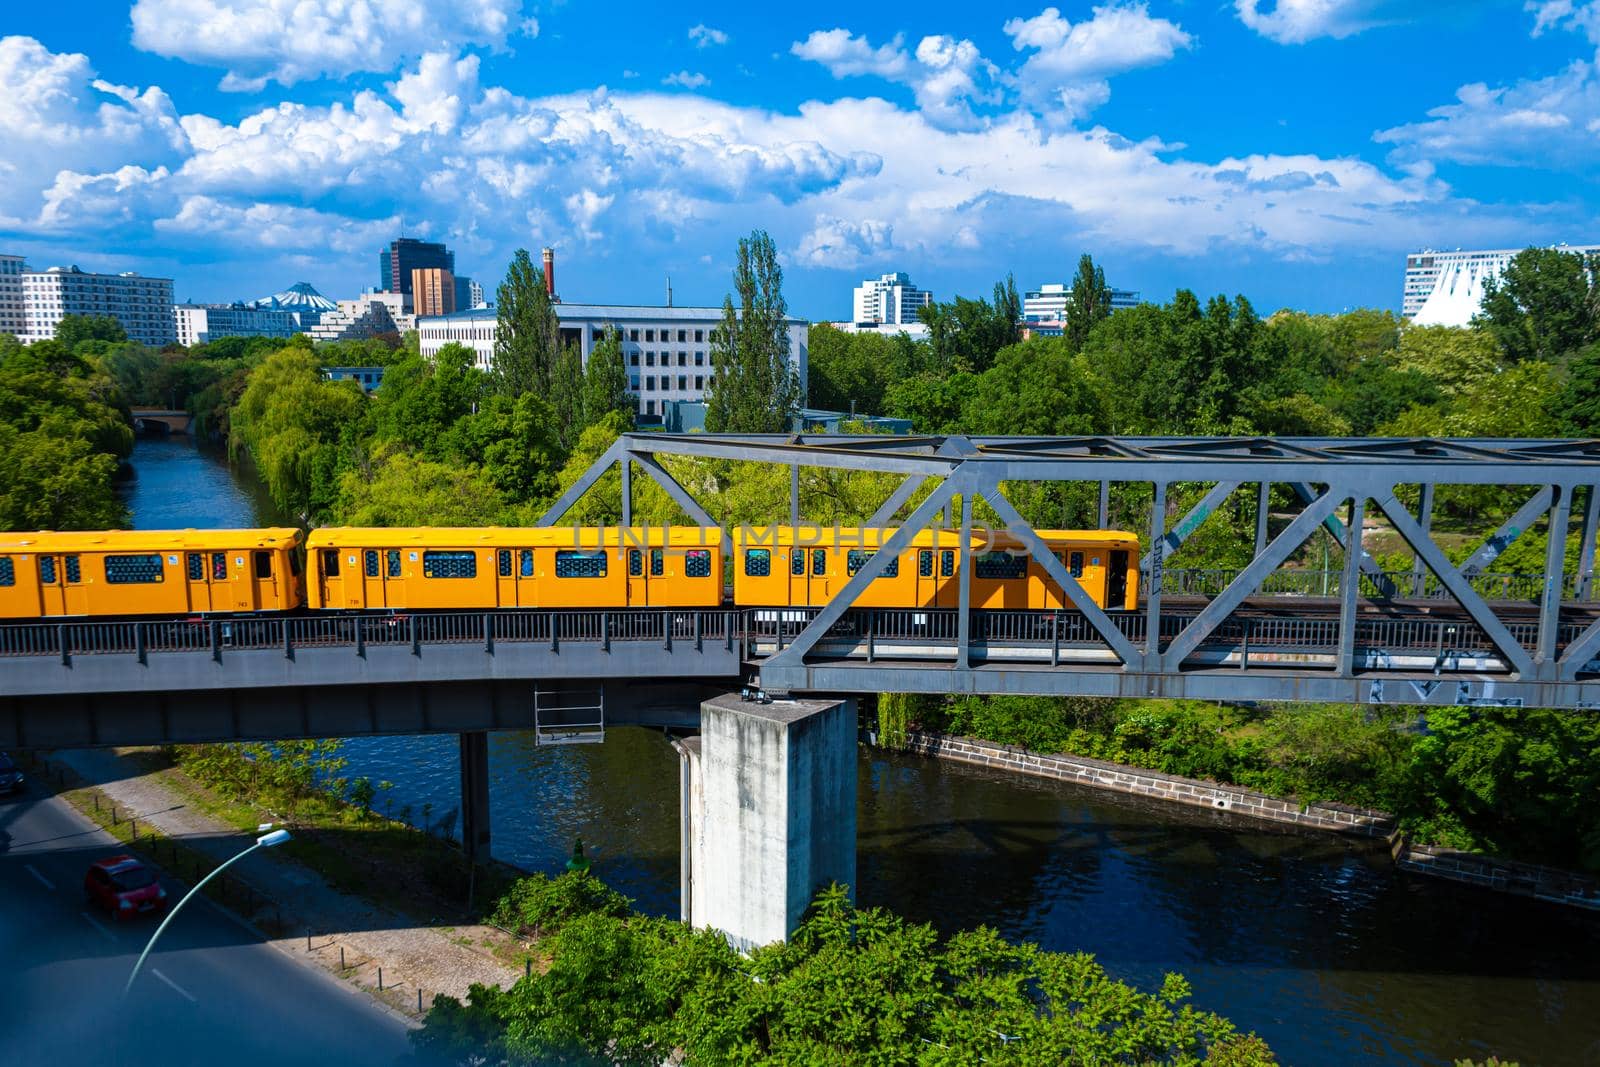 A bright yellow passenger train rides across a bridge over a river.